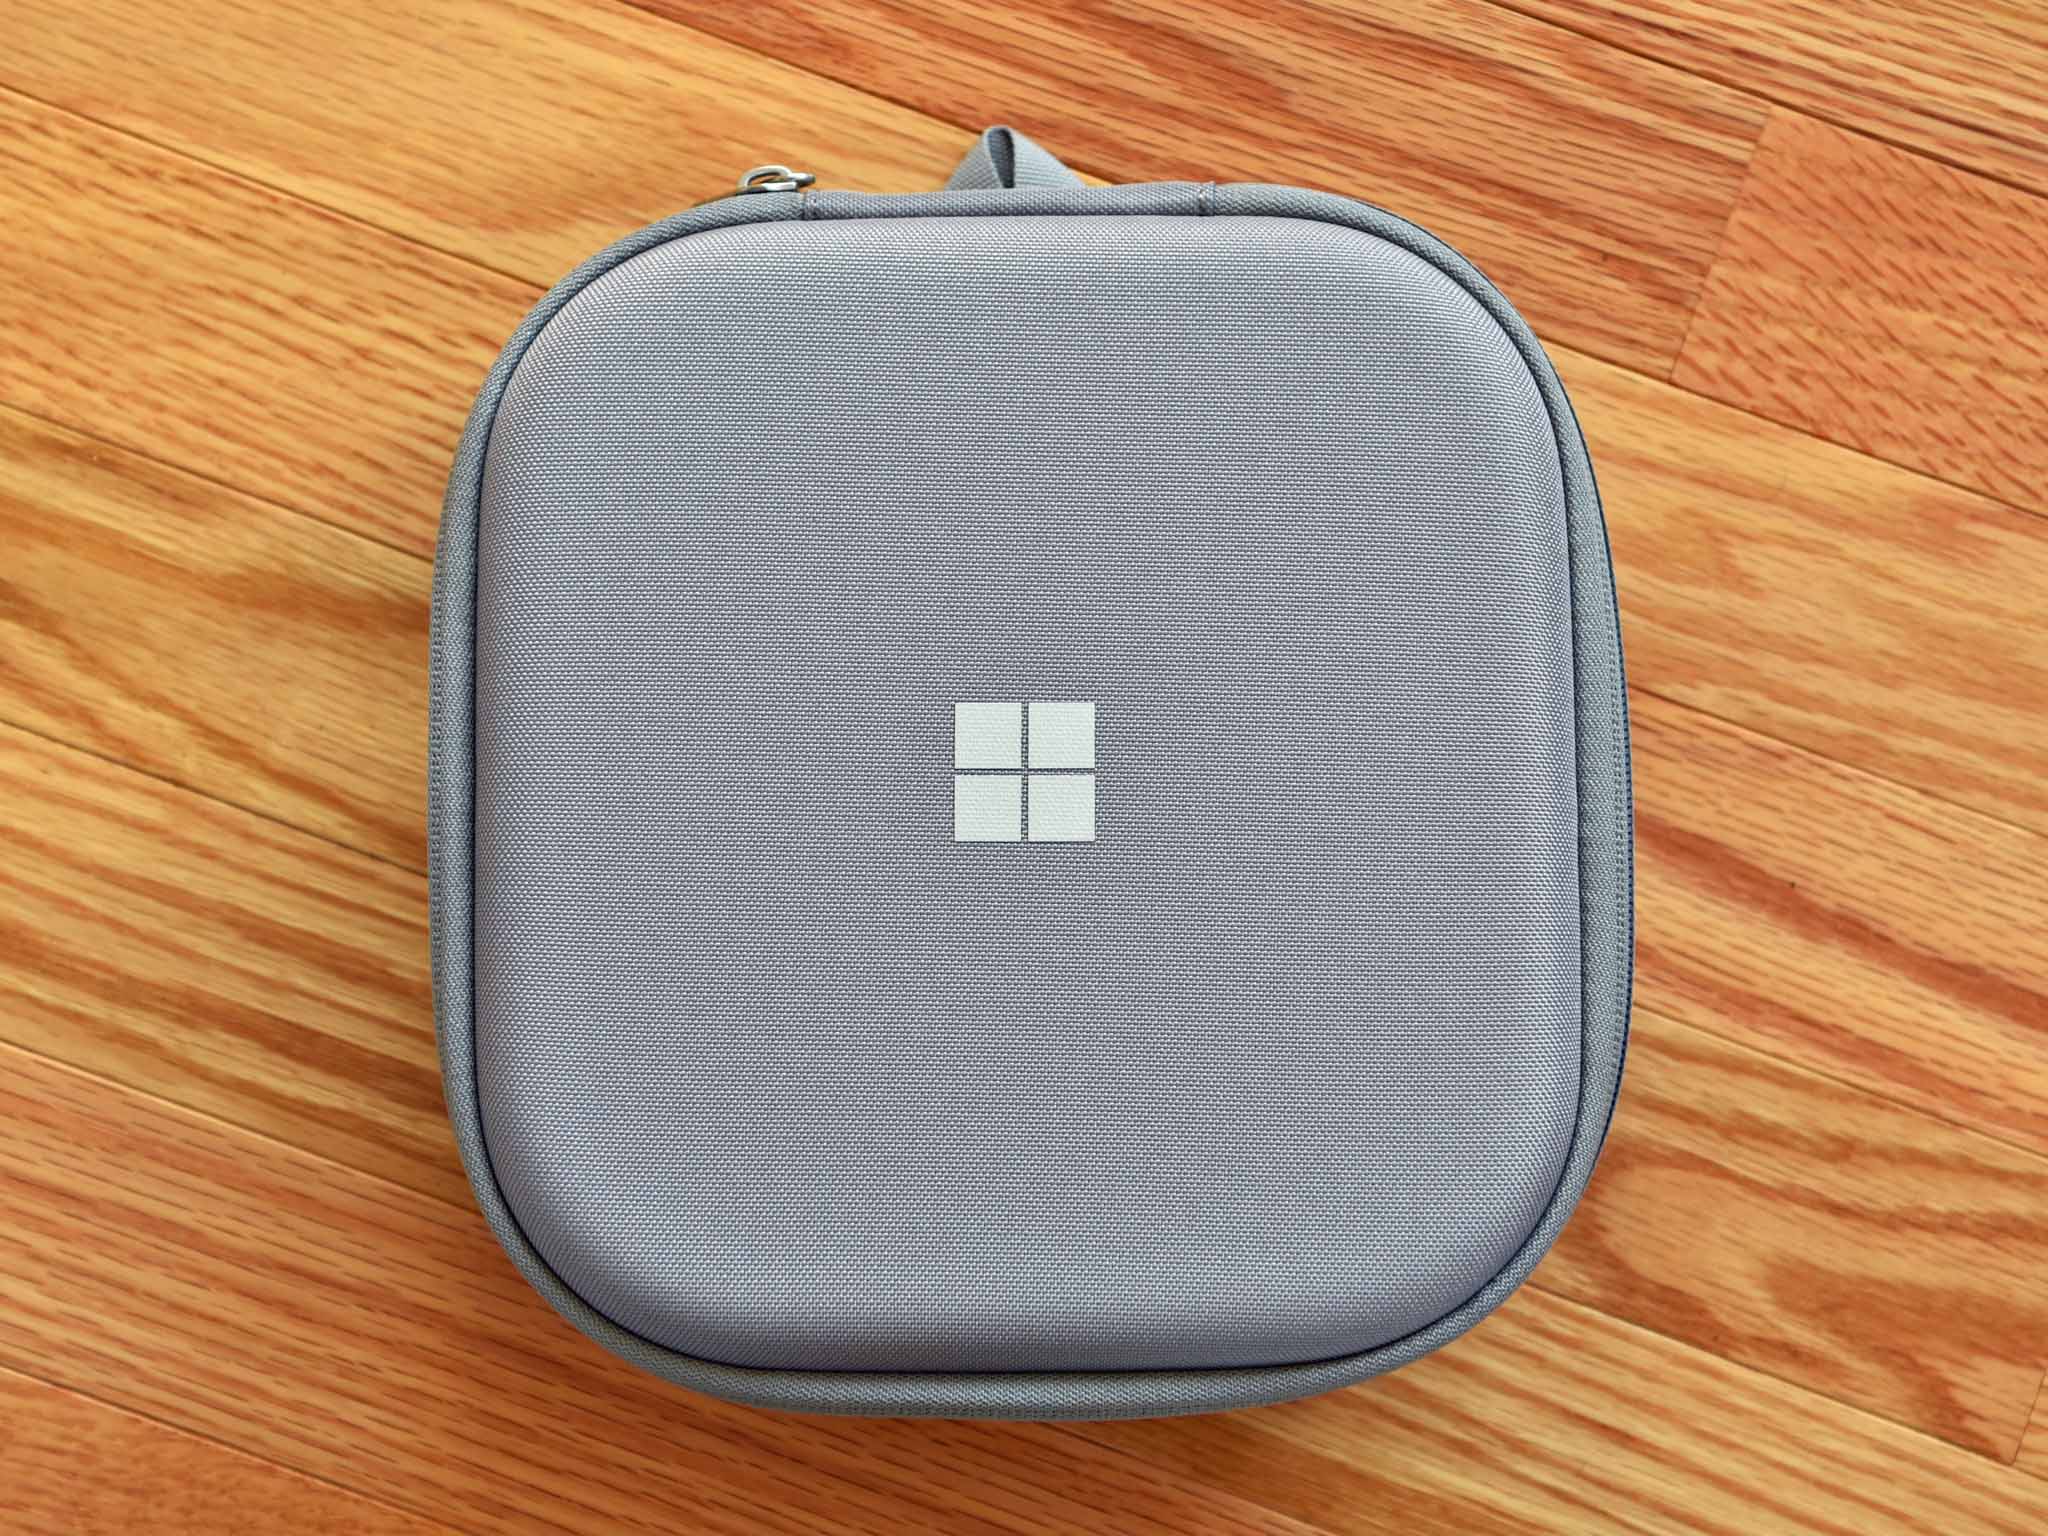 Microsoft Surface HeadphonesMicrosoft Surface Headphones